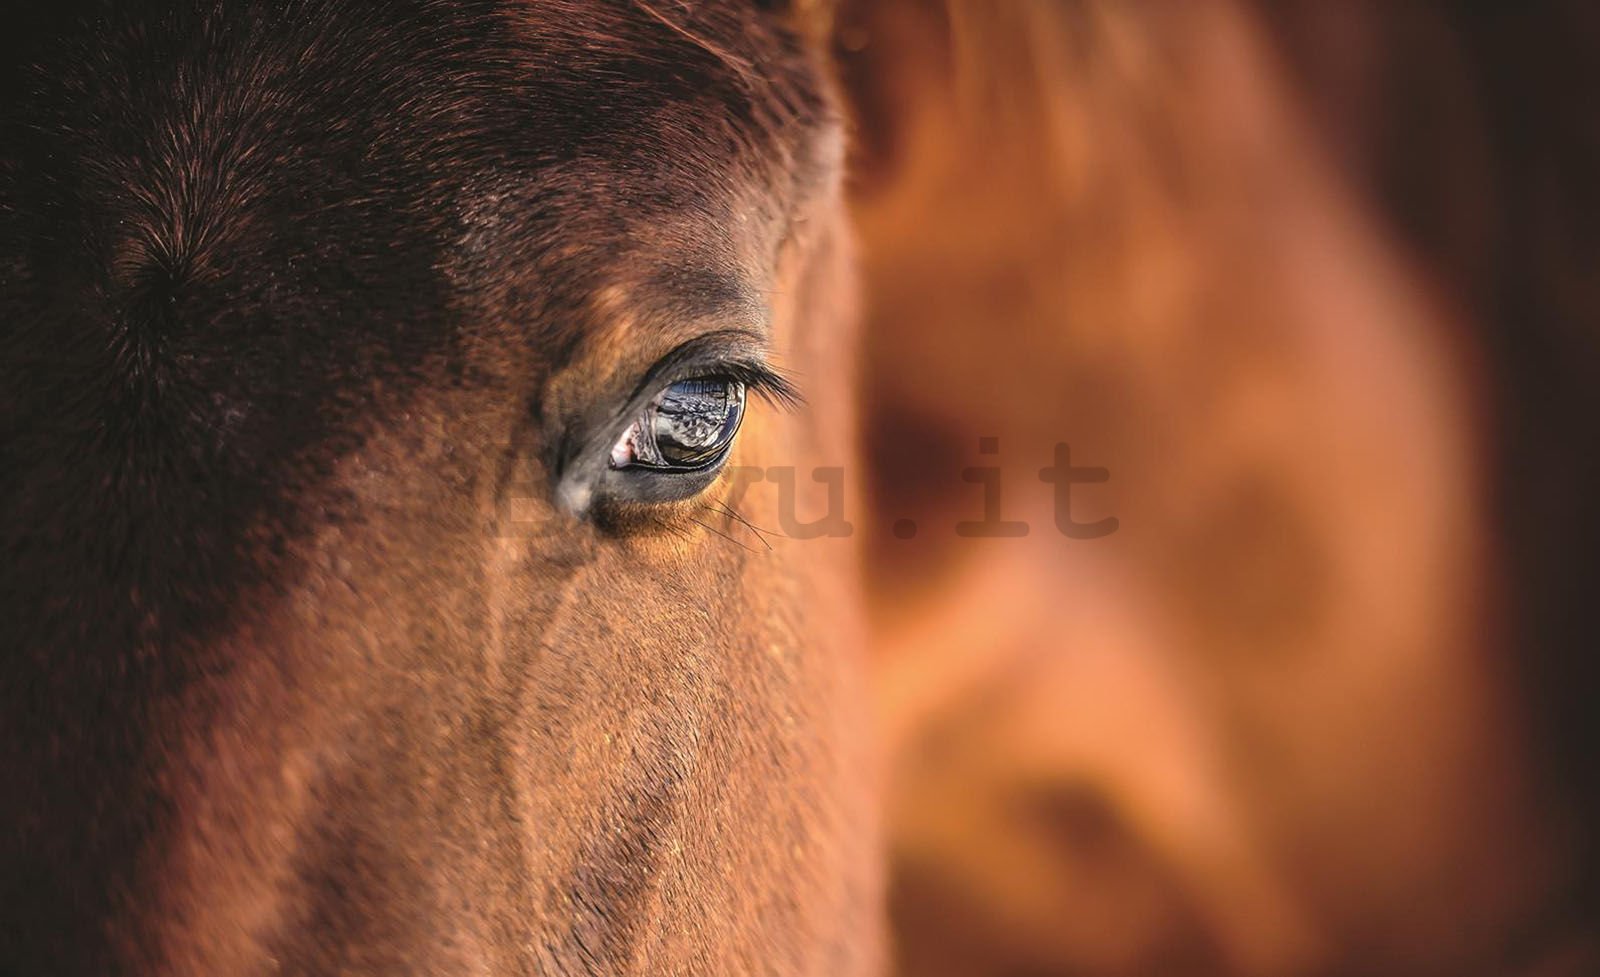 Fotomurale: Cavallo (2) - 368x254 cm